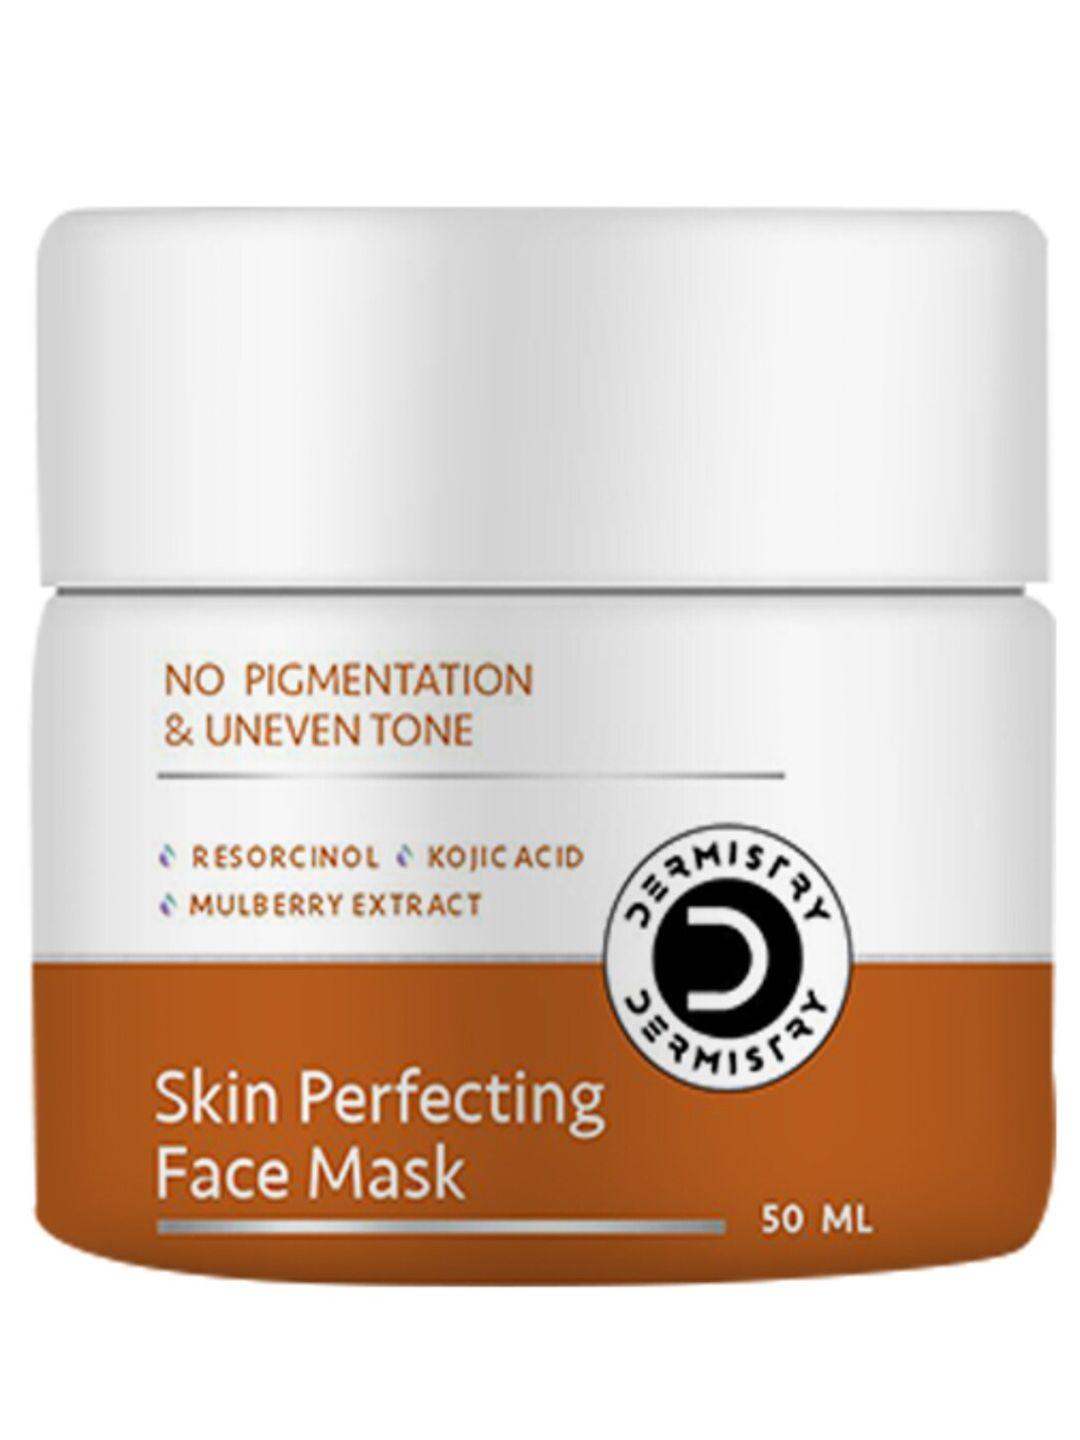 vigini dermistry skin perfecting face mask for pigmentation dark spots & uneven tone -50ml